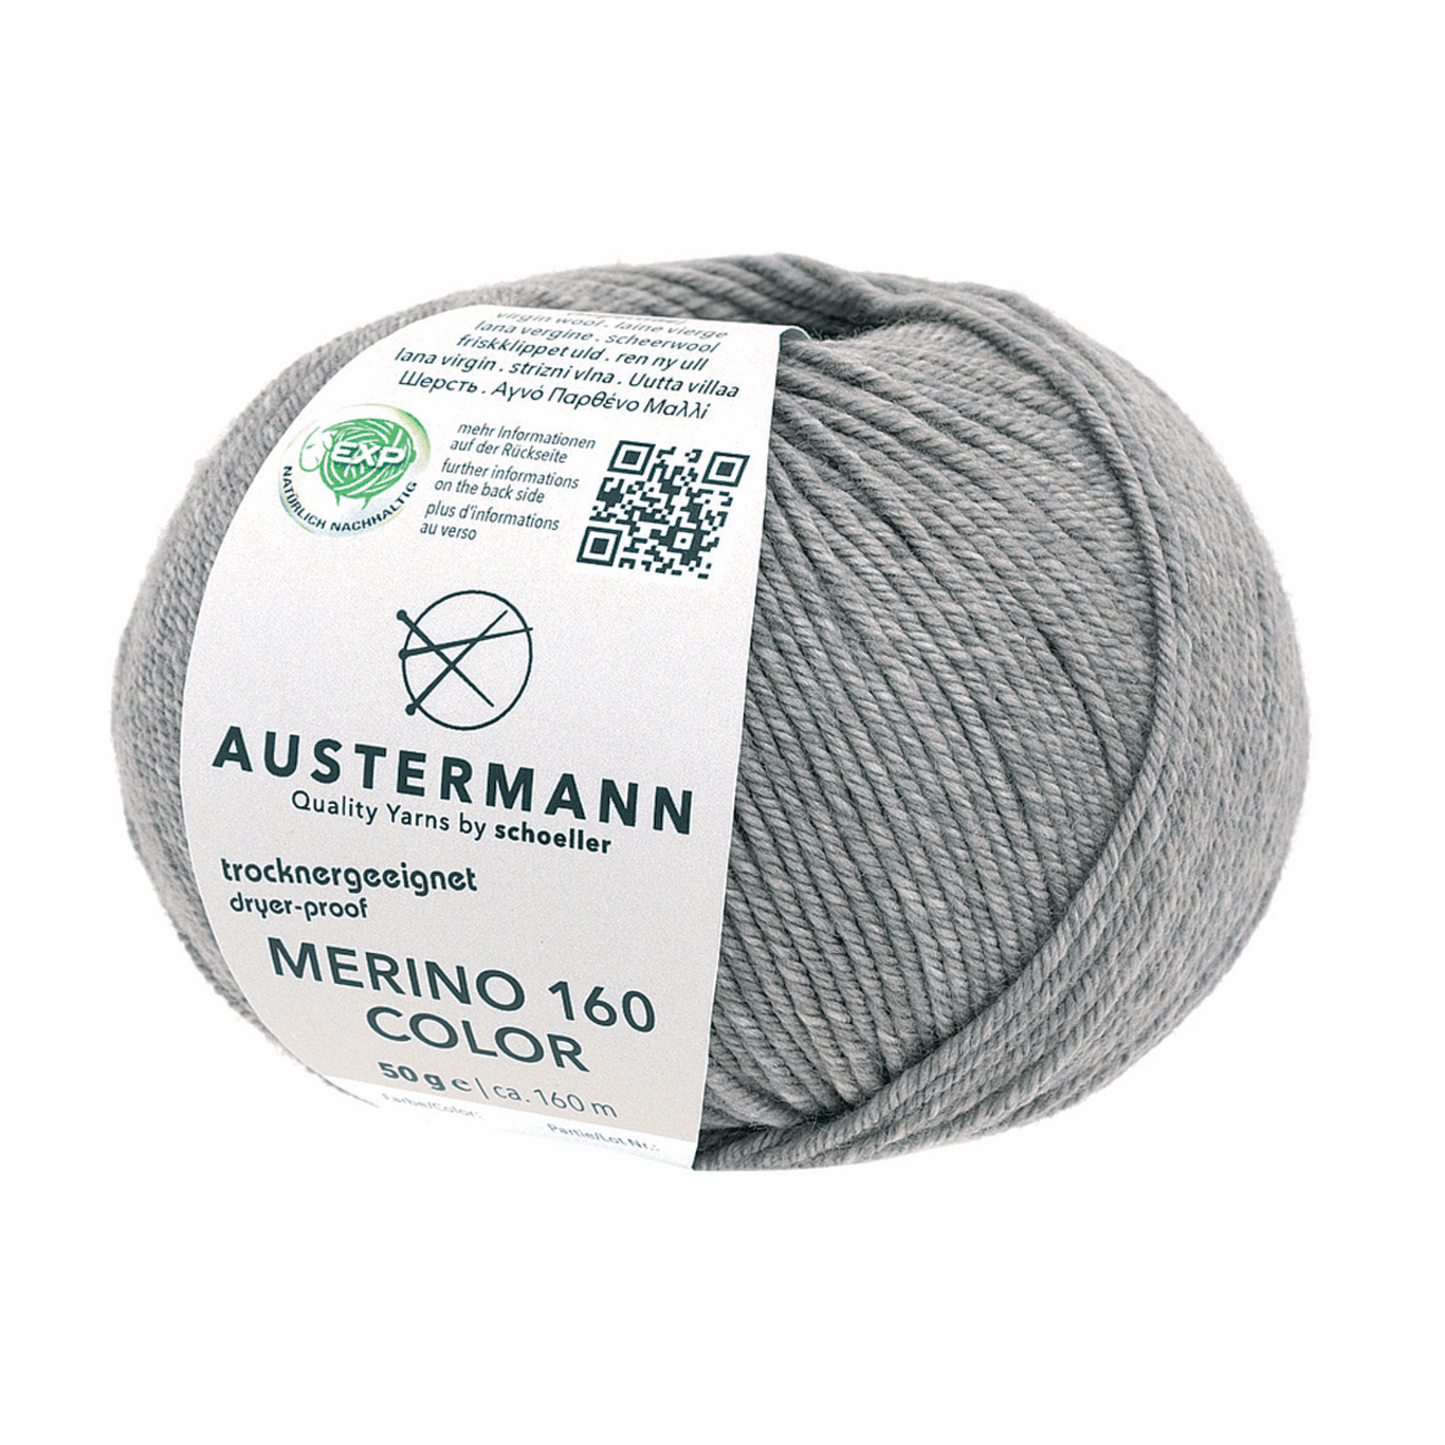 Austermann Merino 160 Color 50g, 97611, Farbe taupe 1211